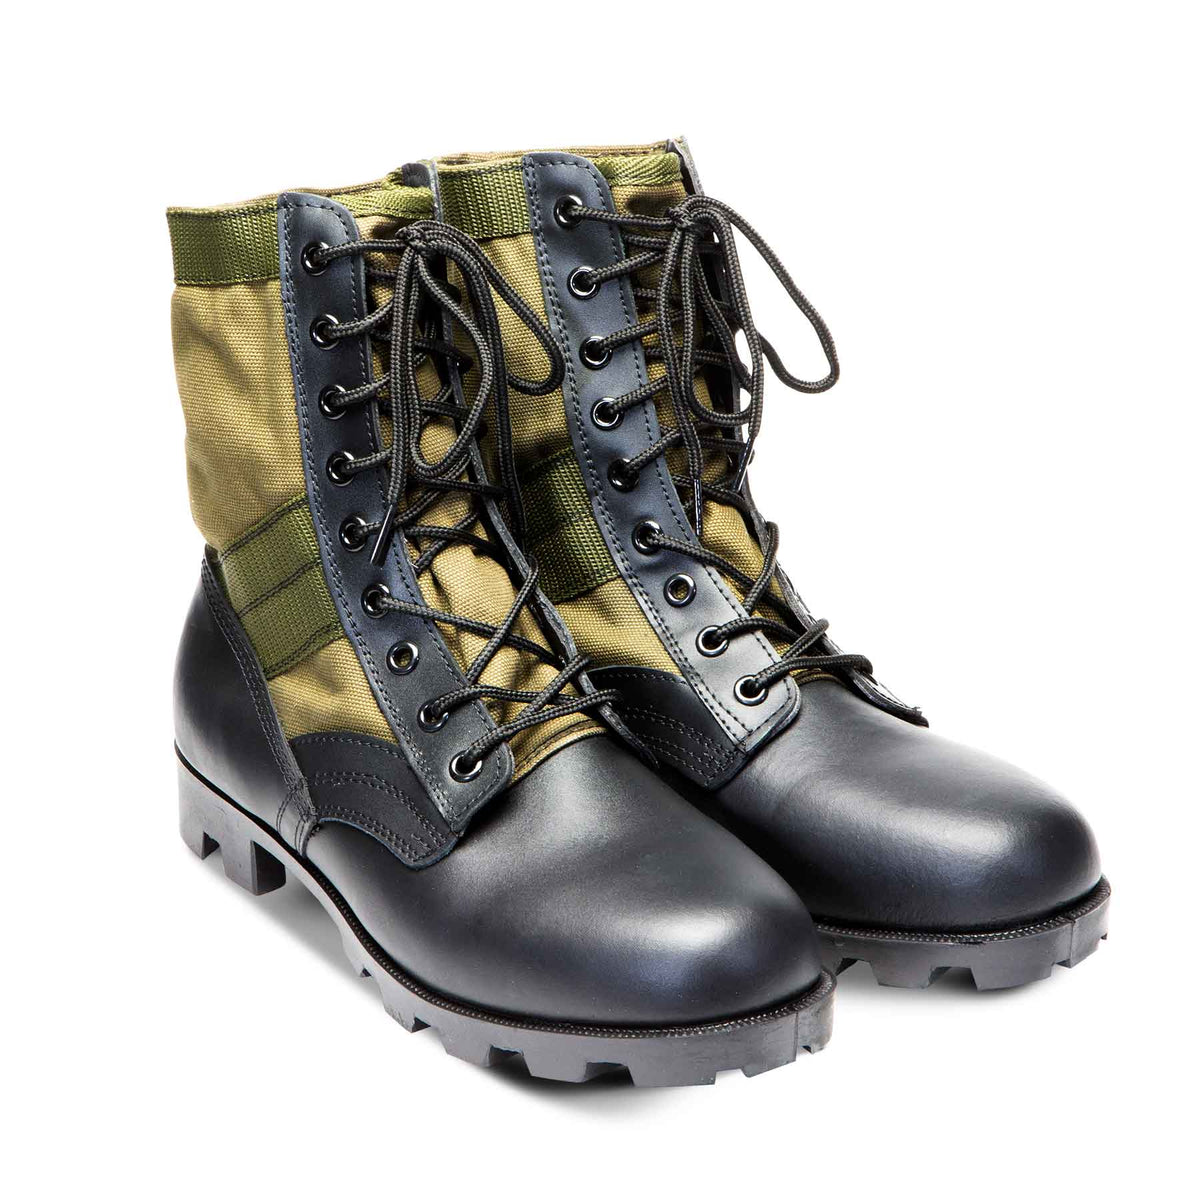 OD Green Jungle Boots — SGT GRIT